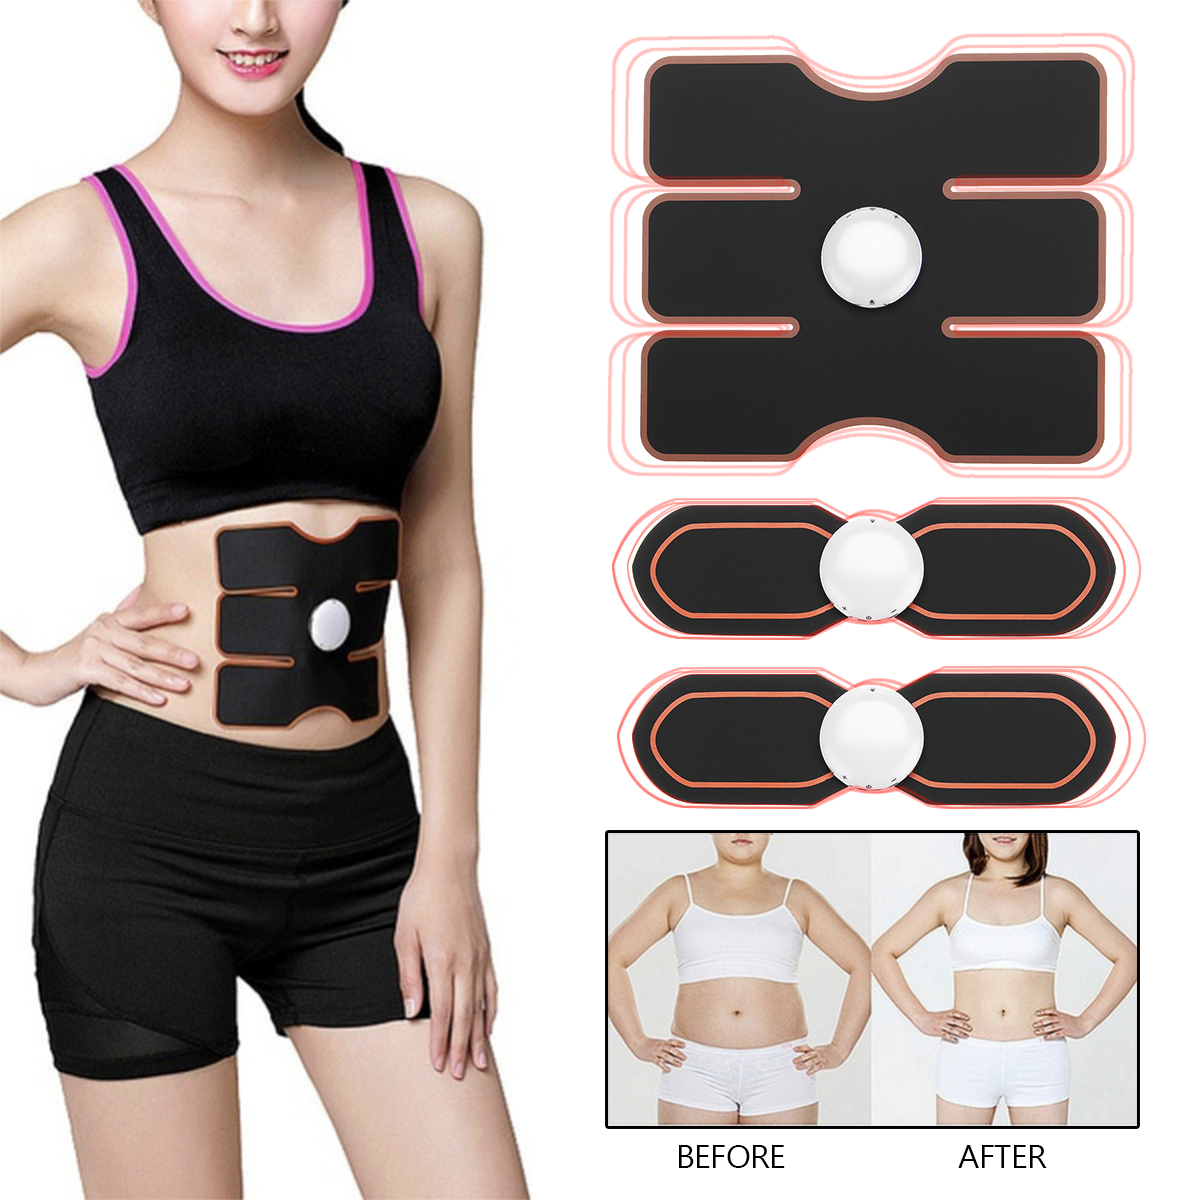 Abs-Stimulator-Muscle-Toner-Abdominal-Trainer-for-Men-Women-Abdomen-Arm-Leg-EMS-Workout-Body-Fitness-1420740